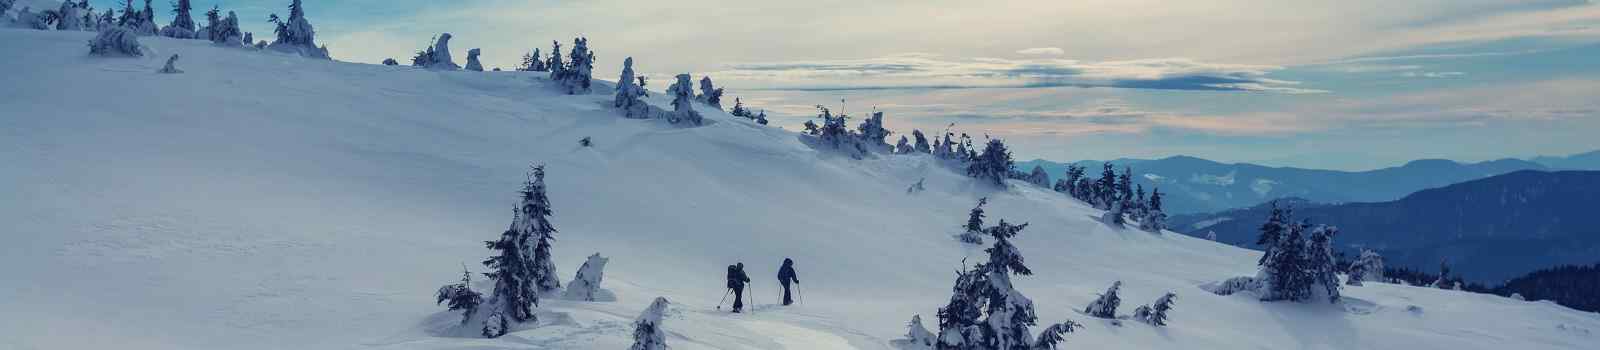 SCHNEESCHUHWANDERN-SCHLIE  Hikers in the winter mountains shutterstock 534857782